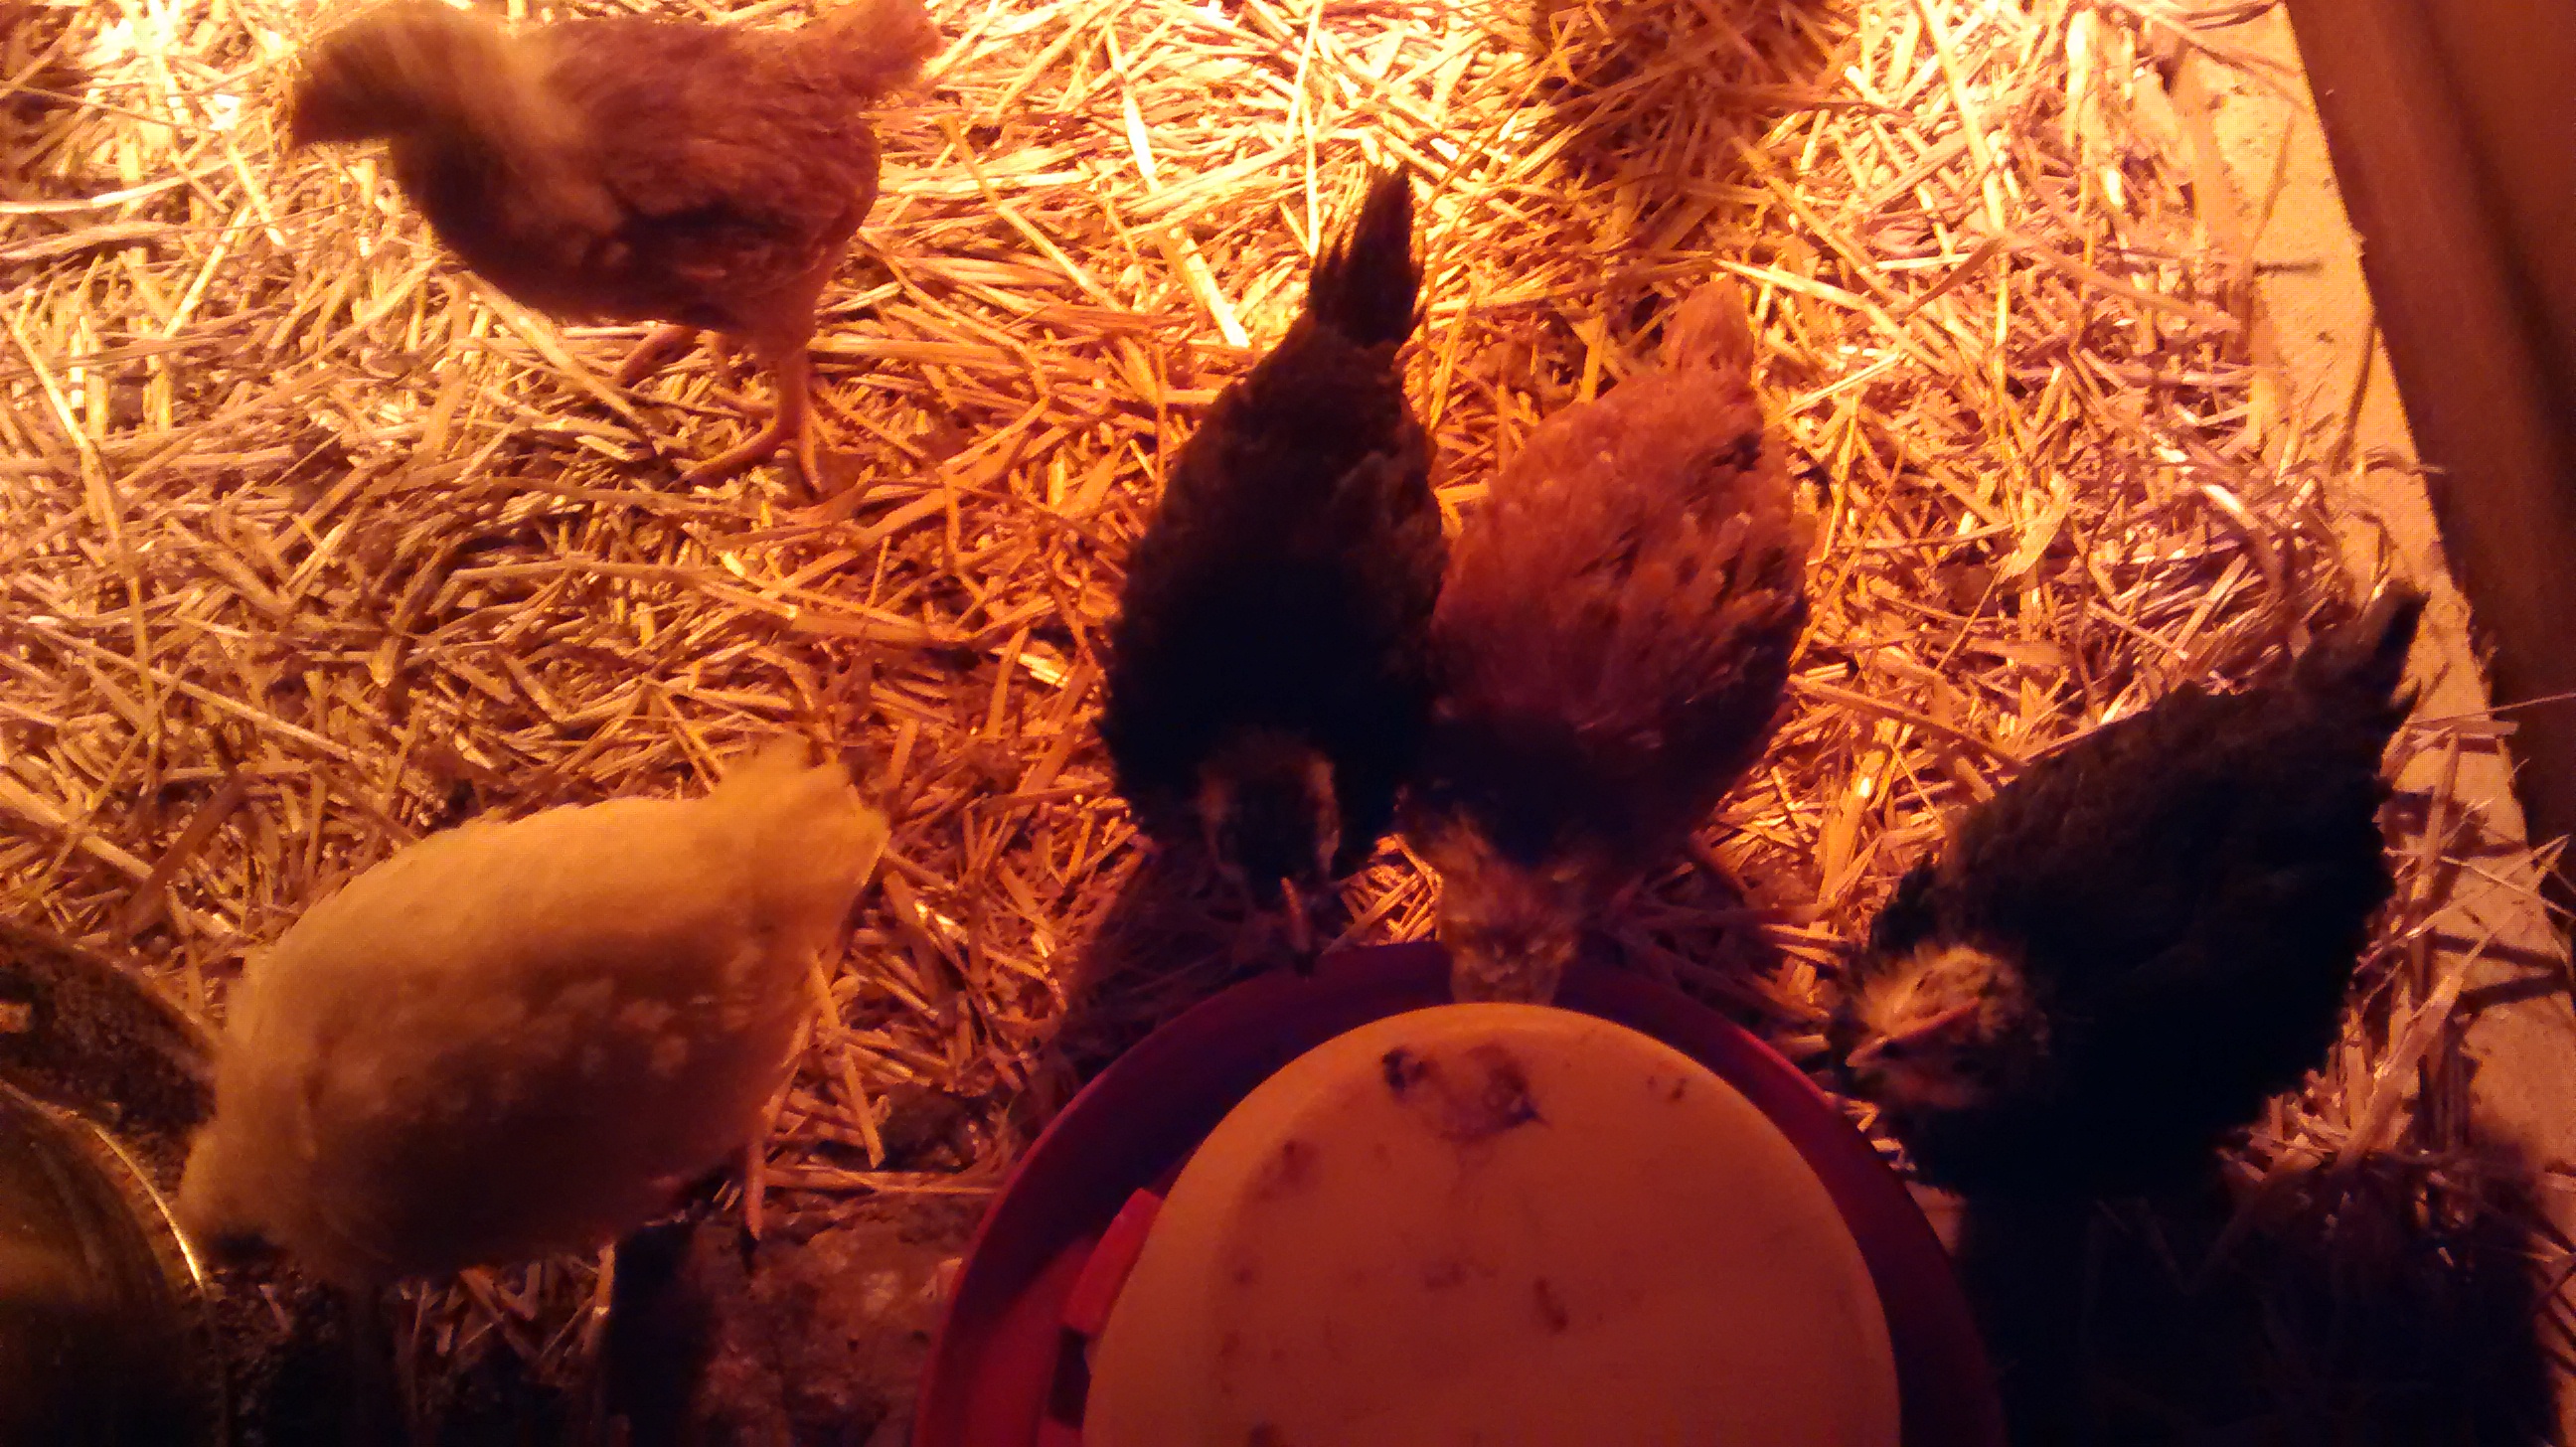 1st chicks at 4 weeks old.